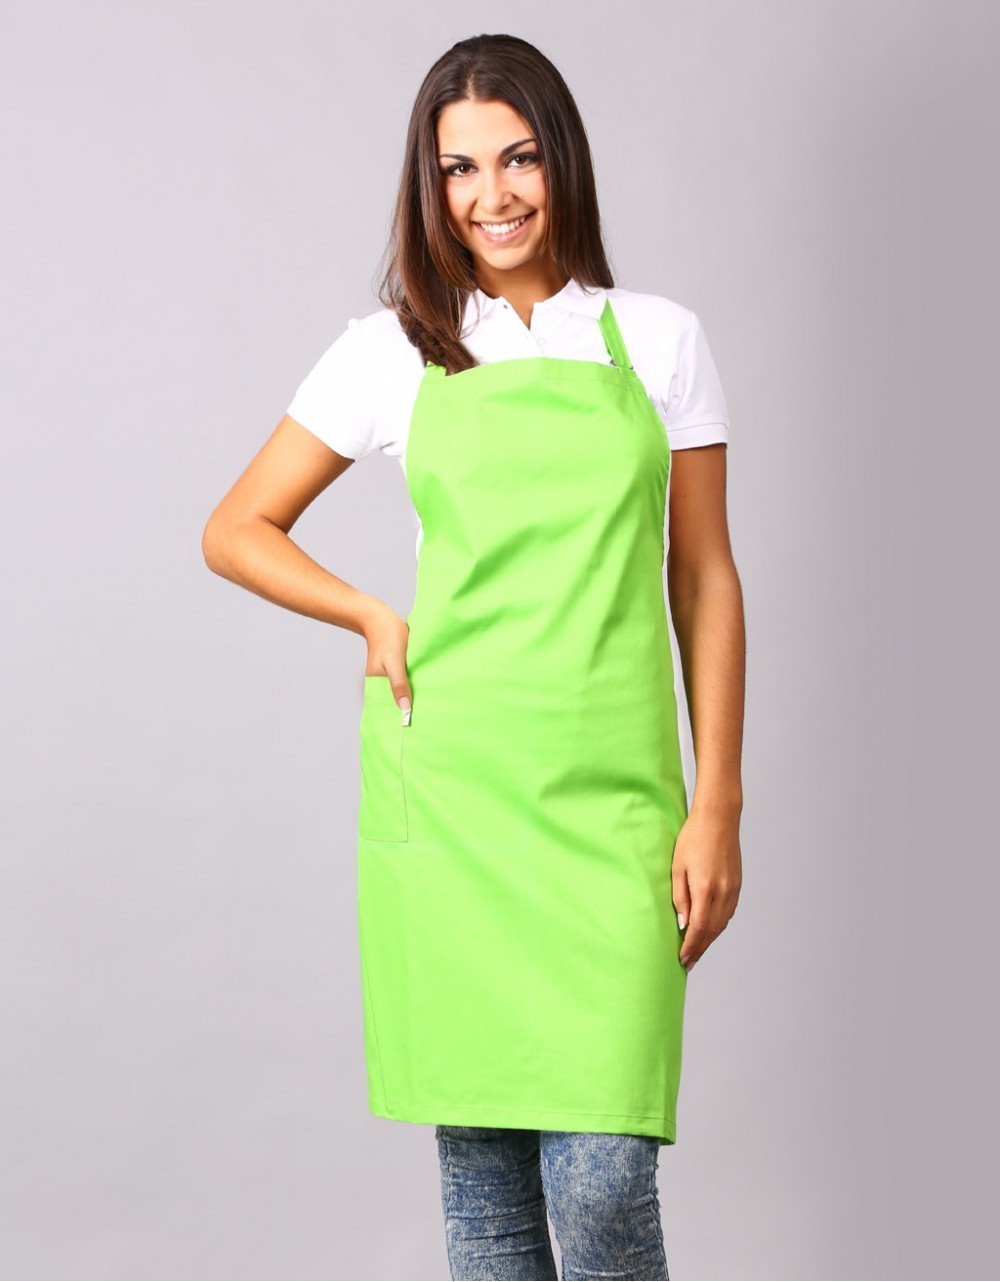 Aprons > Medium bib apron - Basic - lower price!